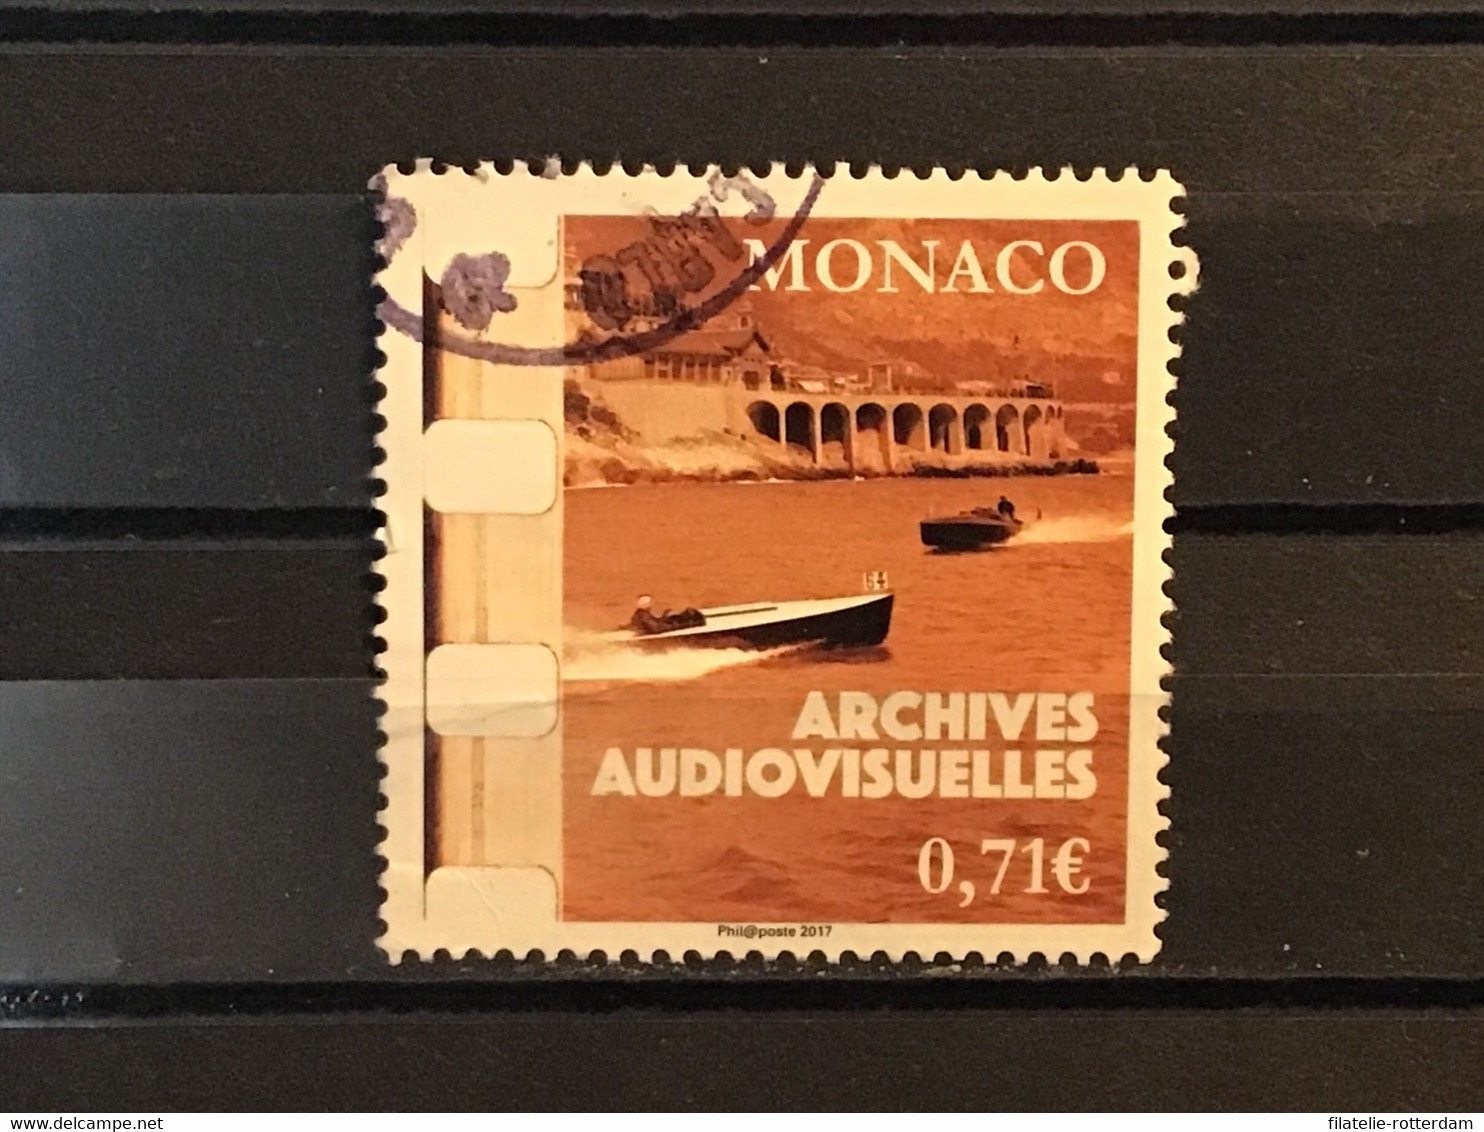 Monaco - Audiovisuele Archieven (0.71) 2017 - Gebraucht